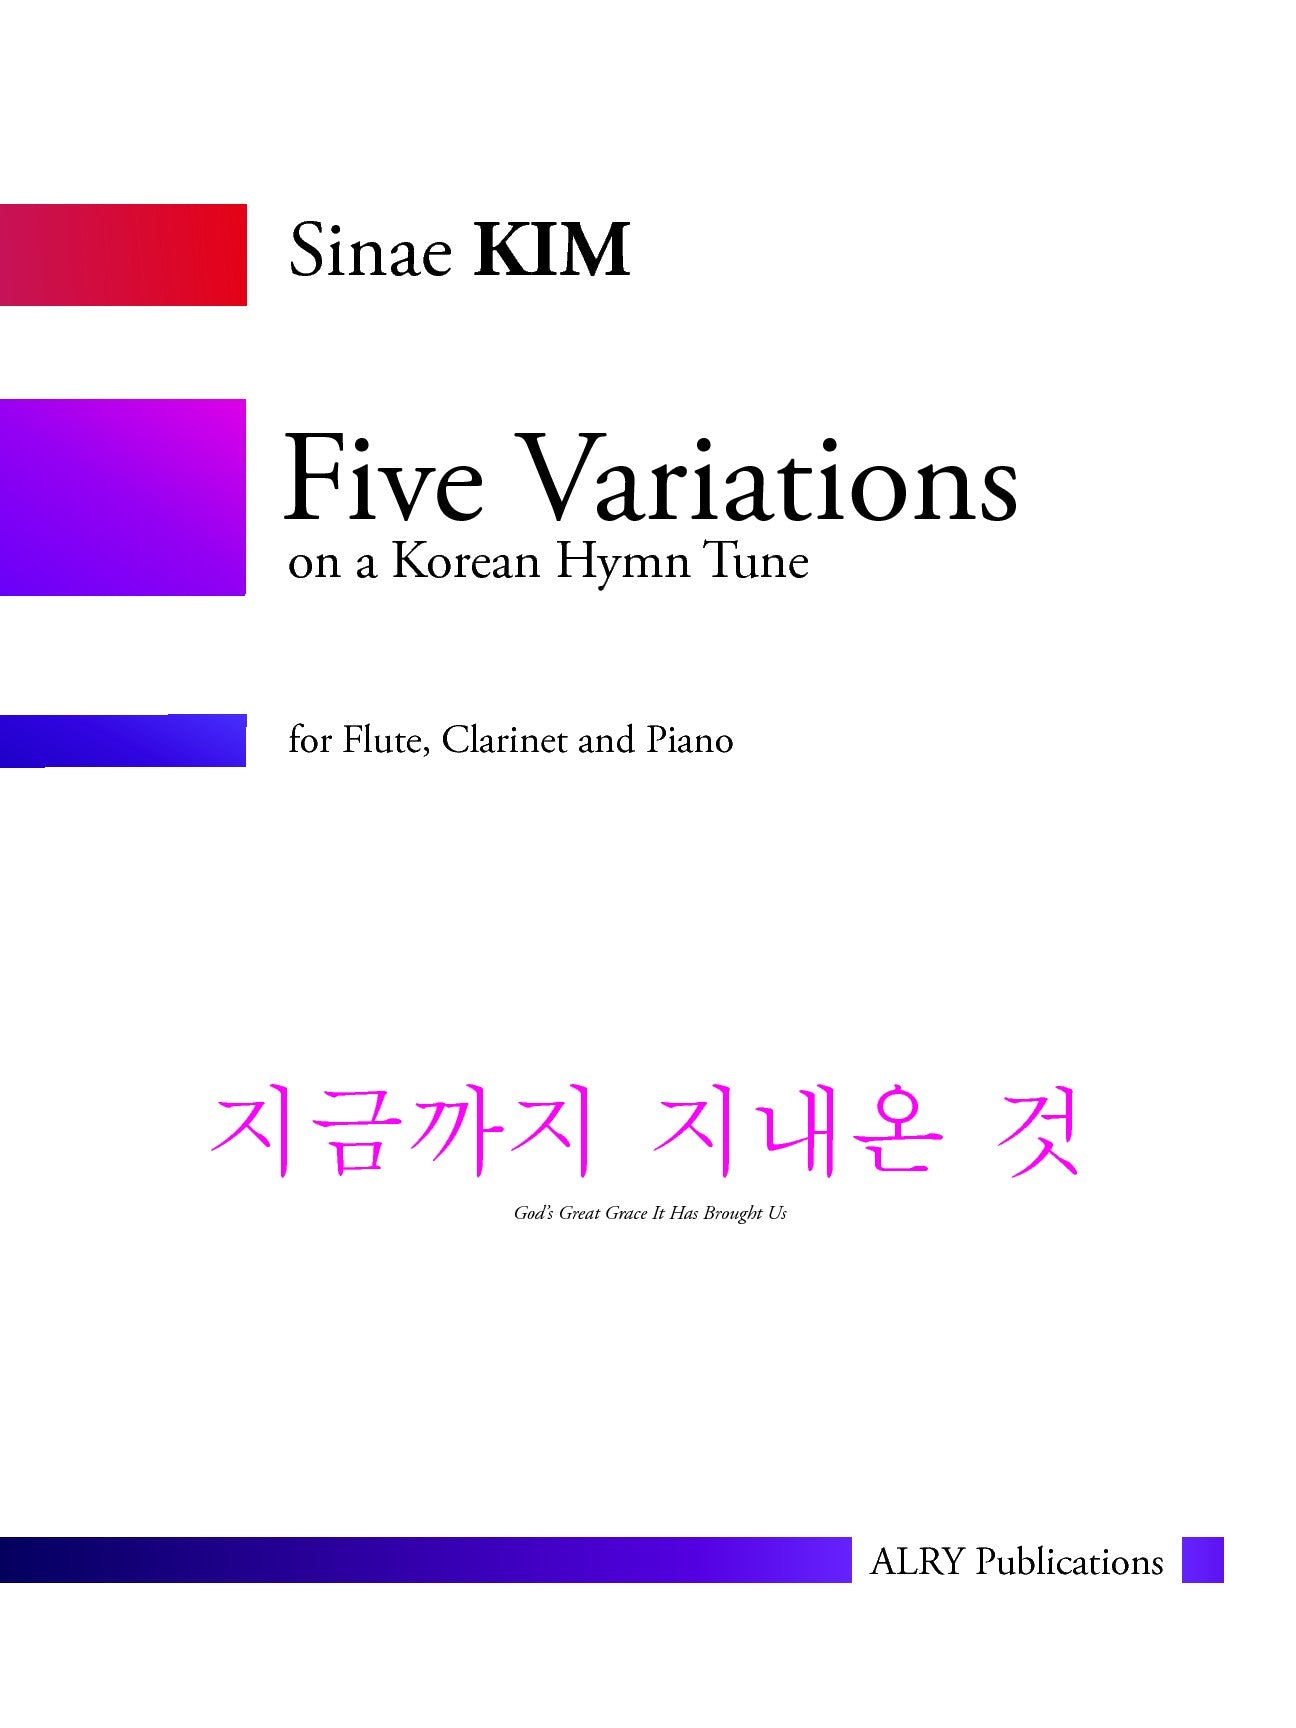 Kim - Five Variations on a Korean Hymn Tune